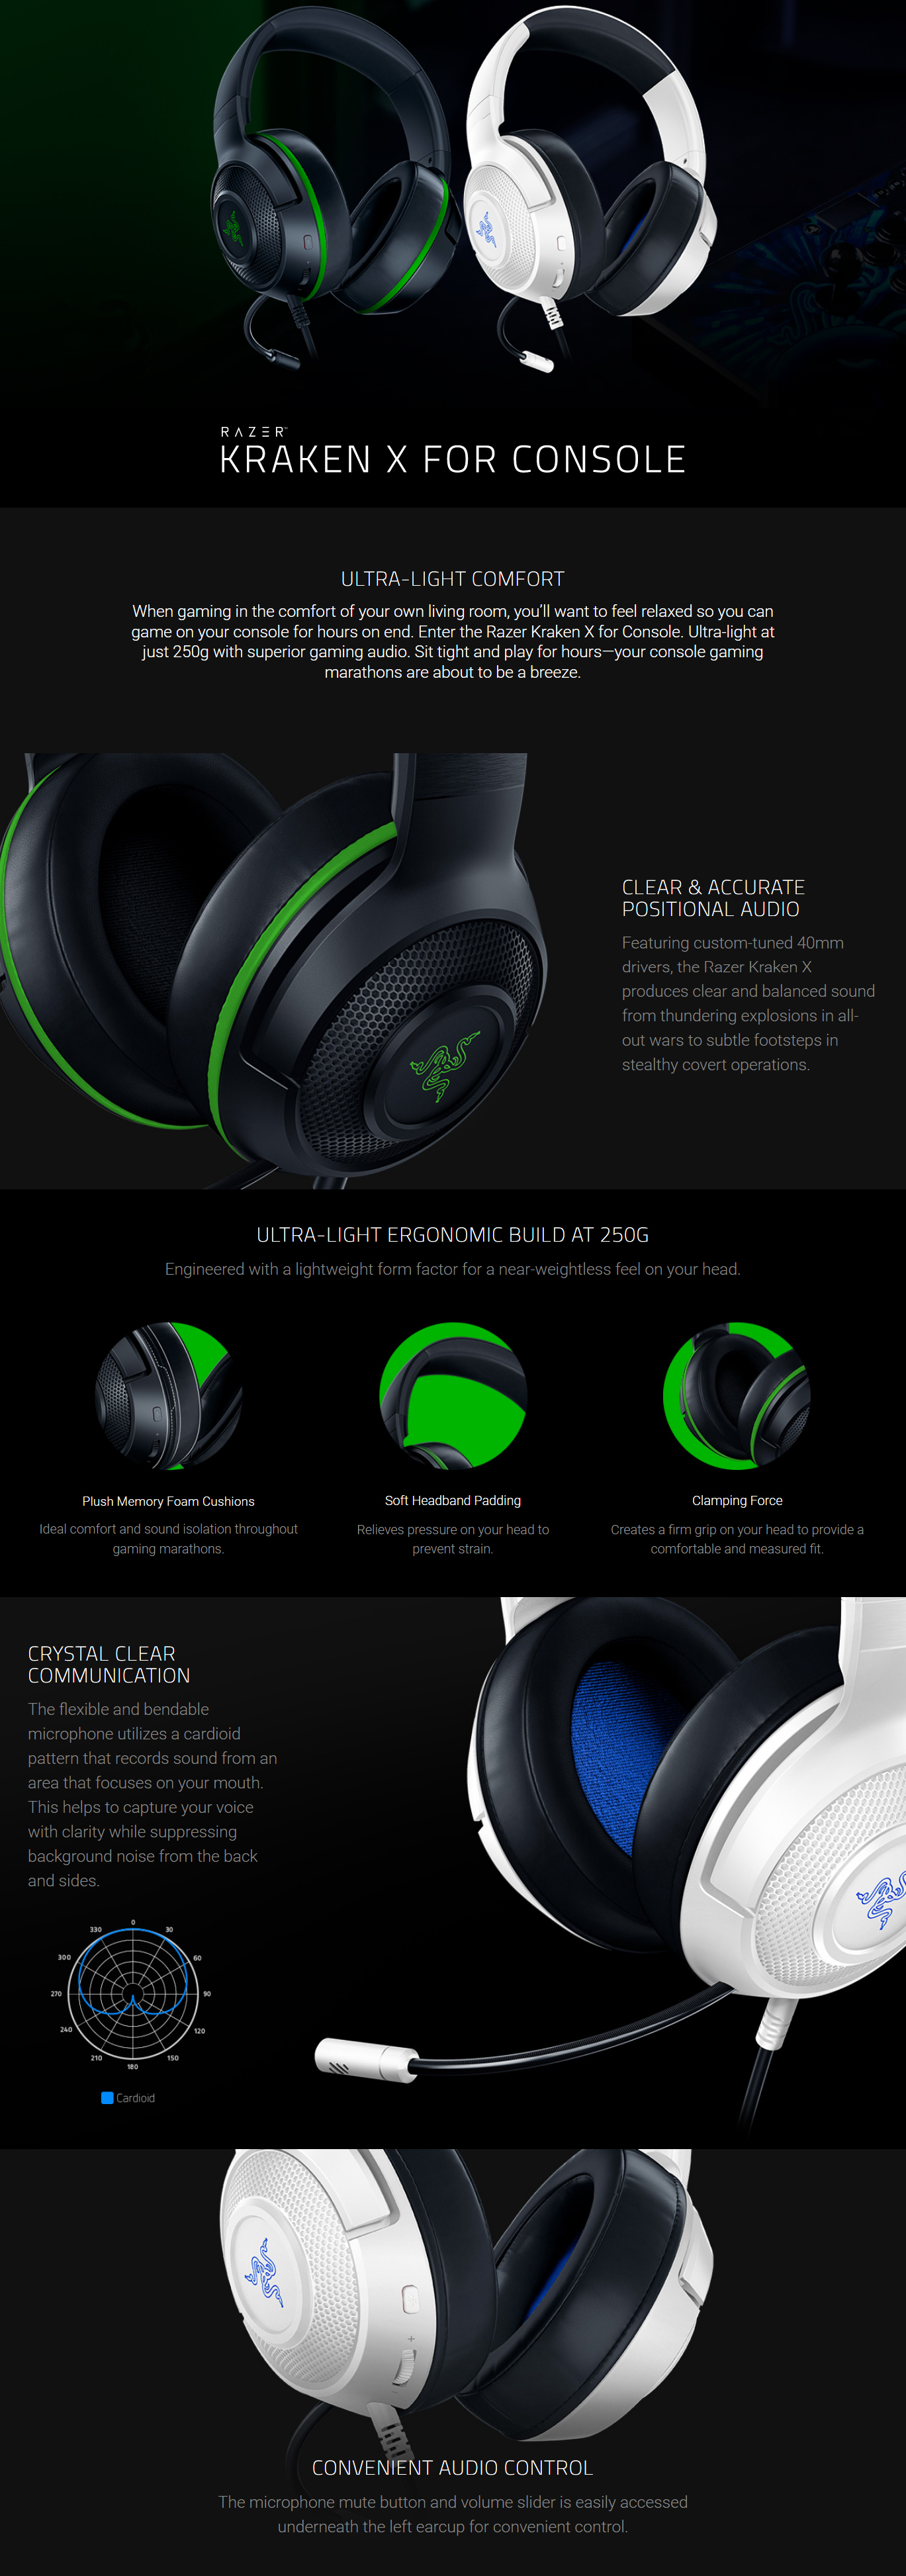 Headphones-Razer-Kraken-X-for-Console-Multi-Platform-Wired-Gaming-Headset-1